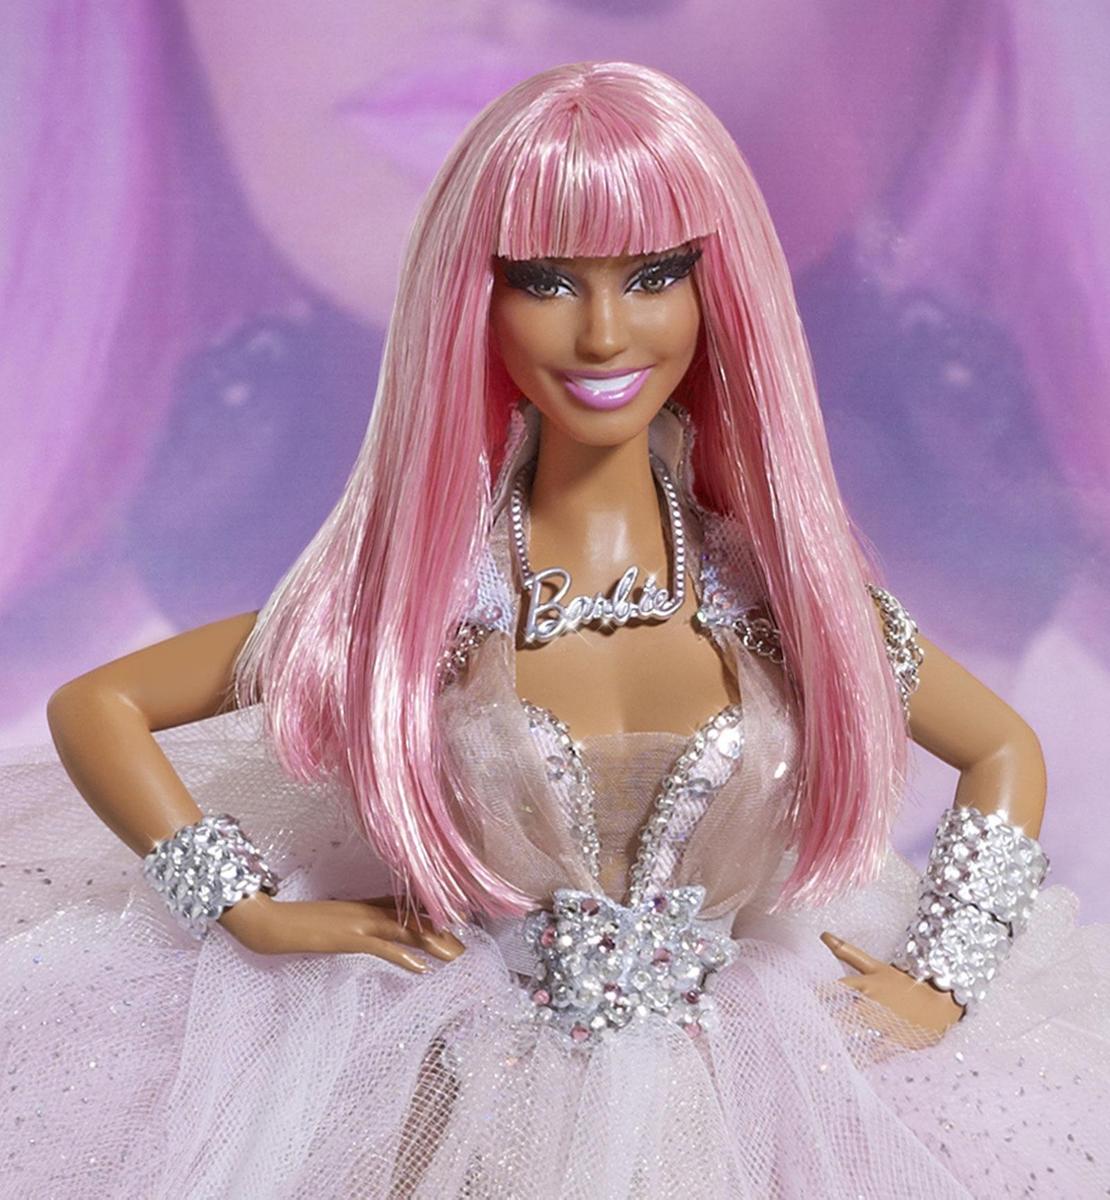 Nicki-Minaj-Barbie-Doll-1